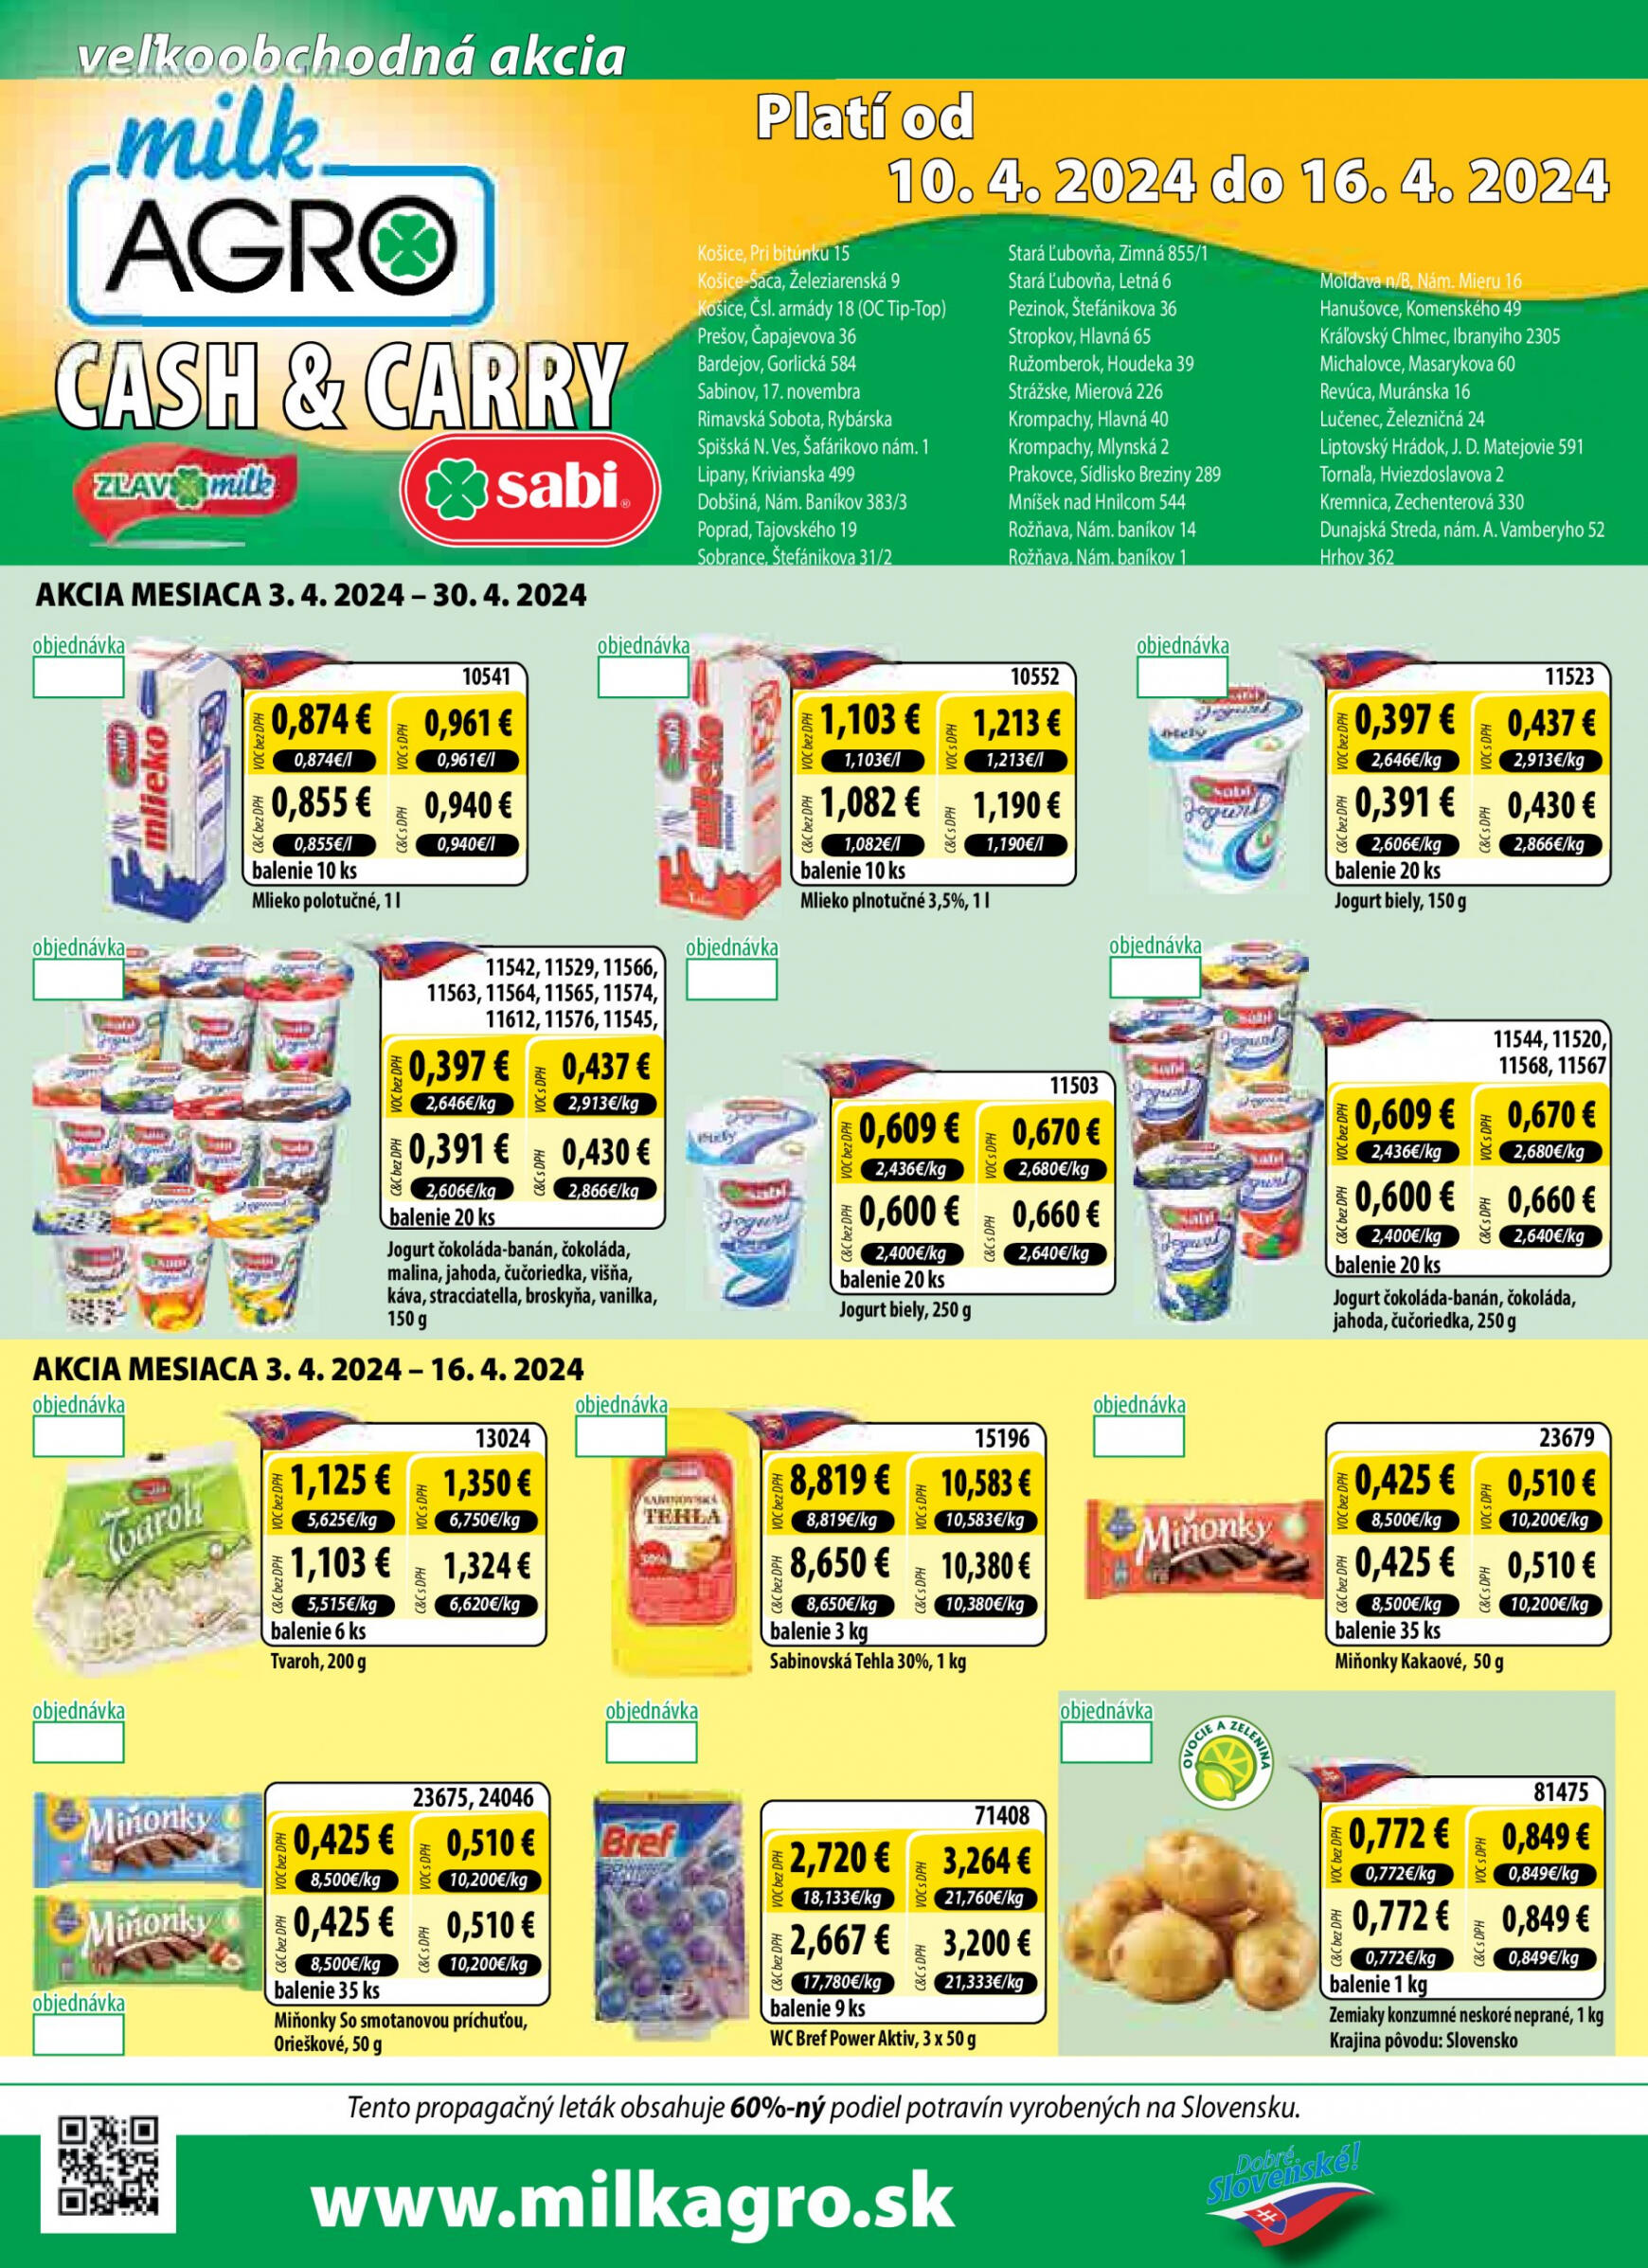 milk-agro - Milk Agro - Cash & Carry leták platný od 10.04. - 16.04.